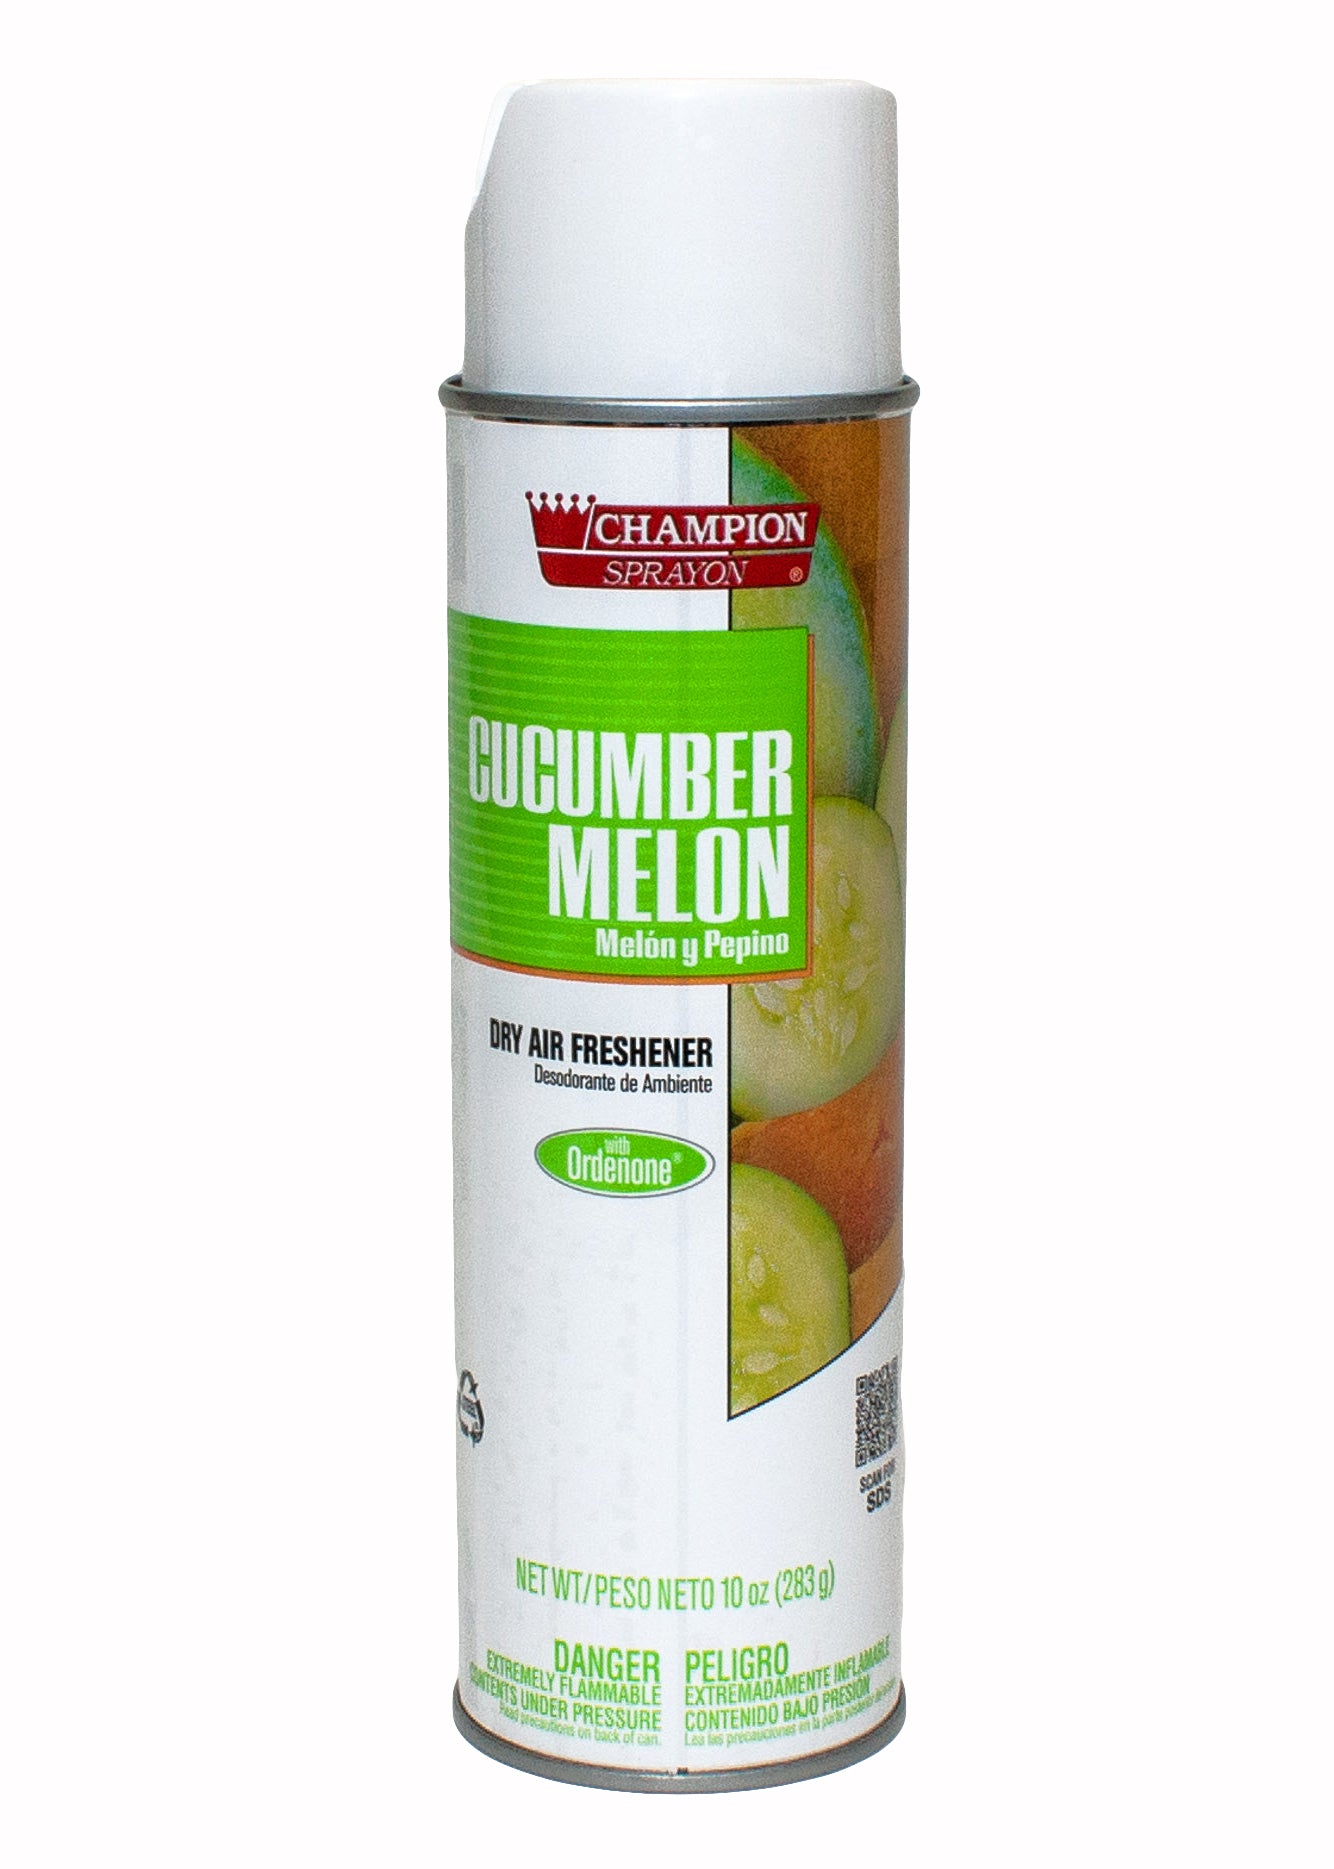 Cucumber Melon Plug in Refill